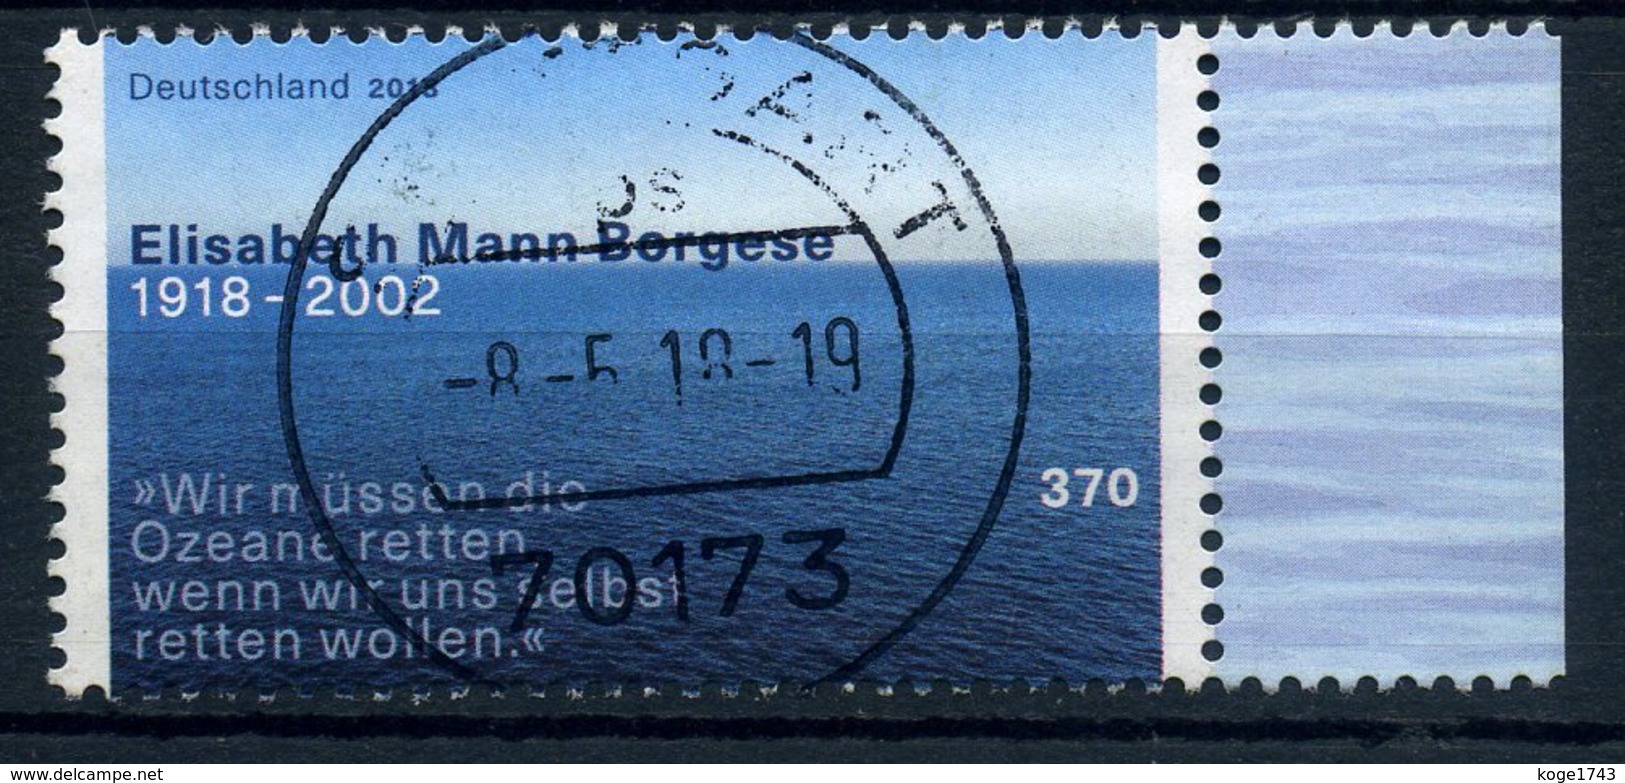 BRD Michel Nr. 3375 Aus Jahr 2018 Gestempelt - Used Stamps